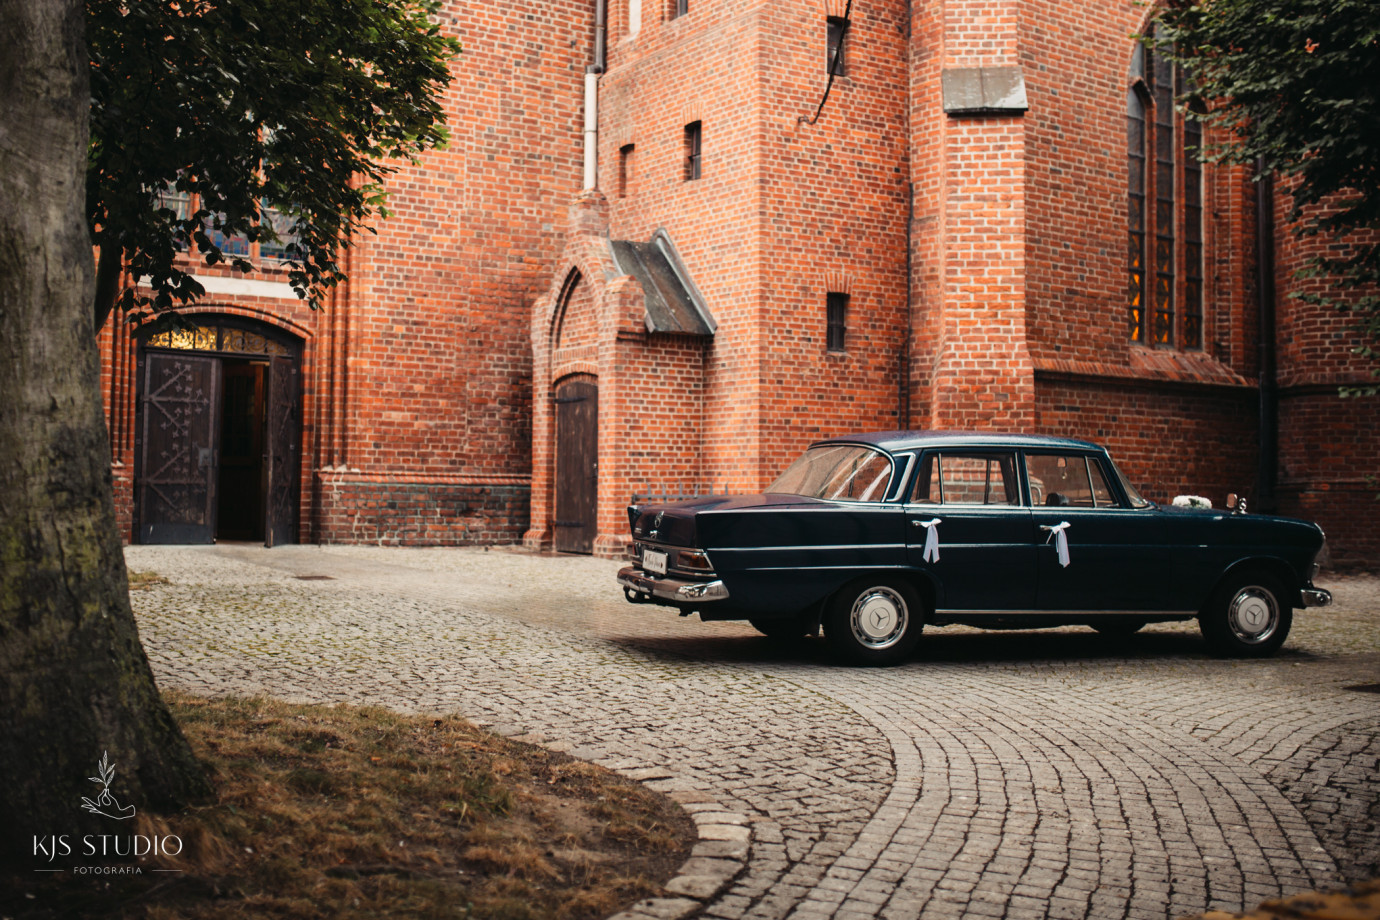 zdjęcia gdansk fotograf kjs-fotografia portfolio zdjecia slubne inspiracje wesele plener slubny sesja slubna